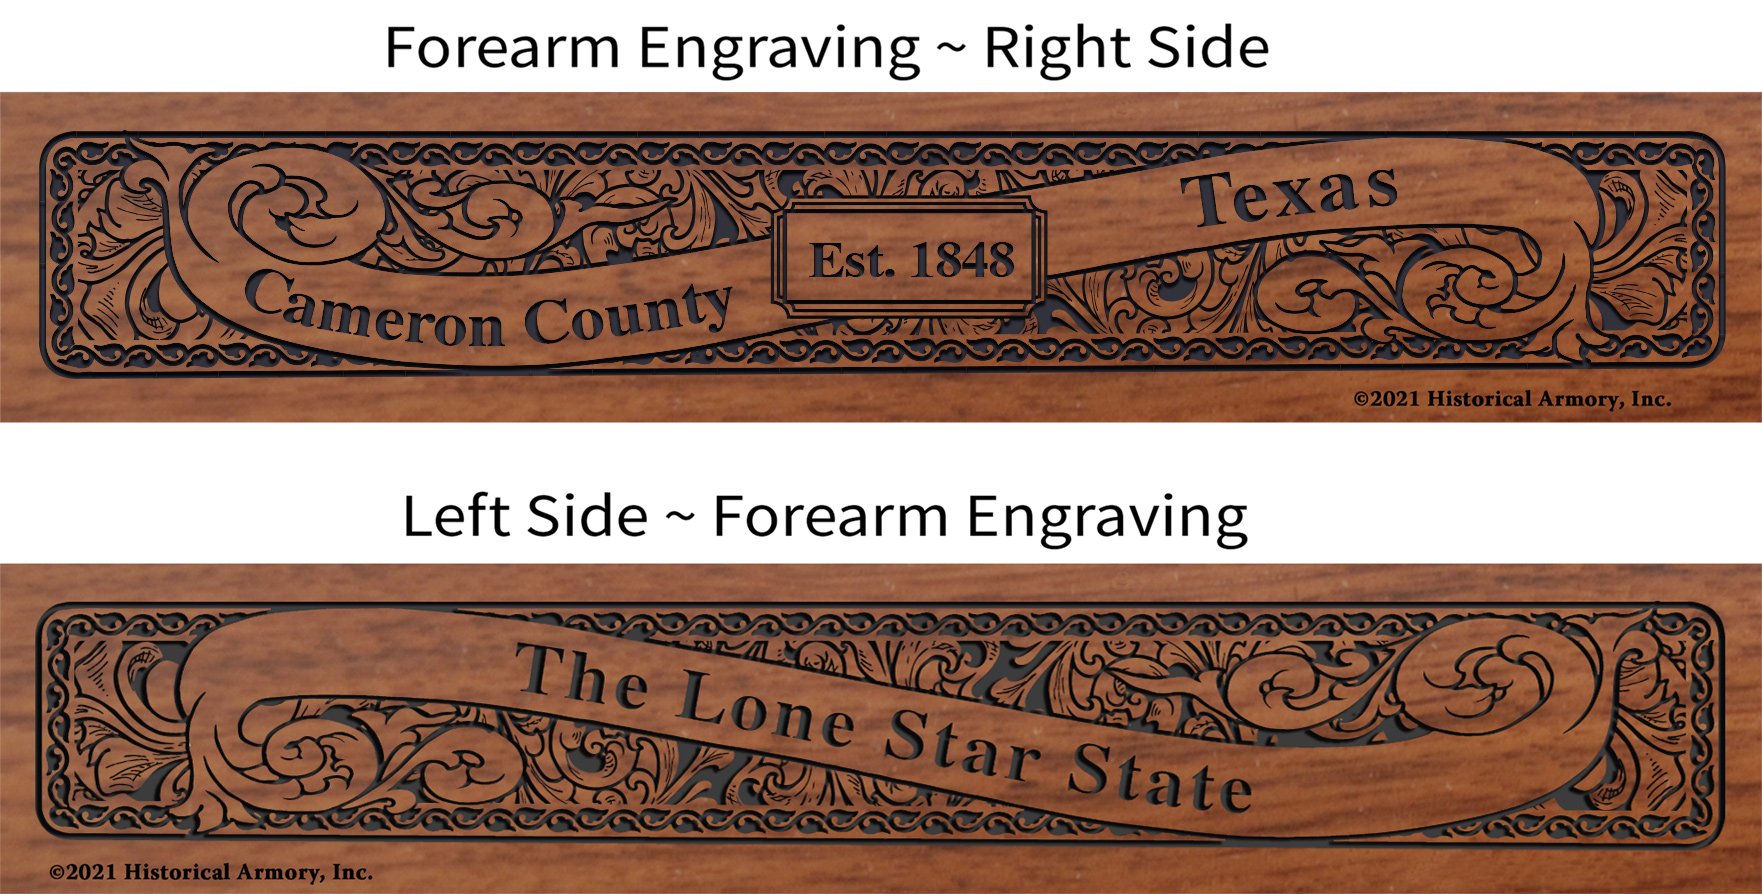 Cameron County Texas Establishment and Motto History Engraved Rifle Forearm